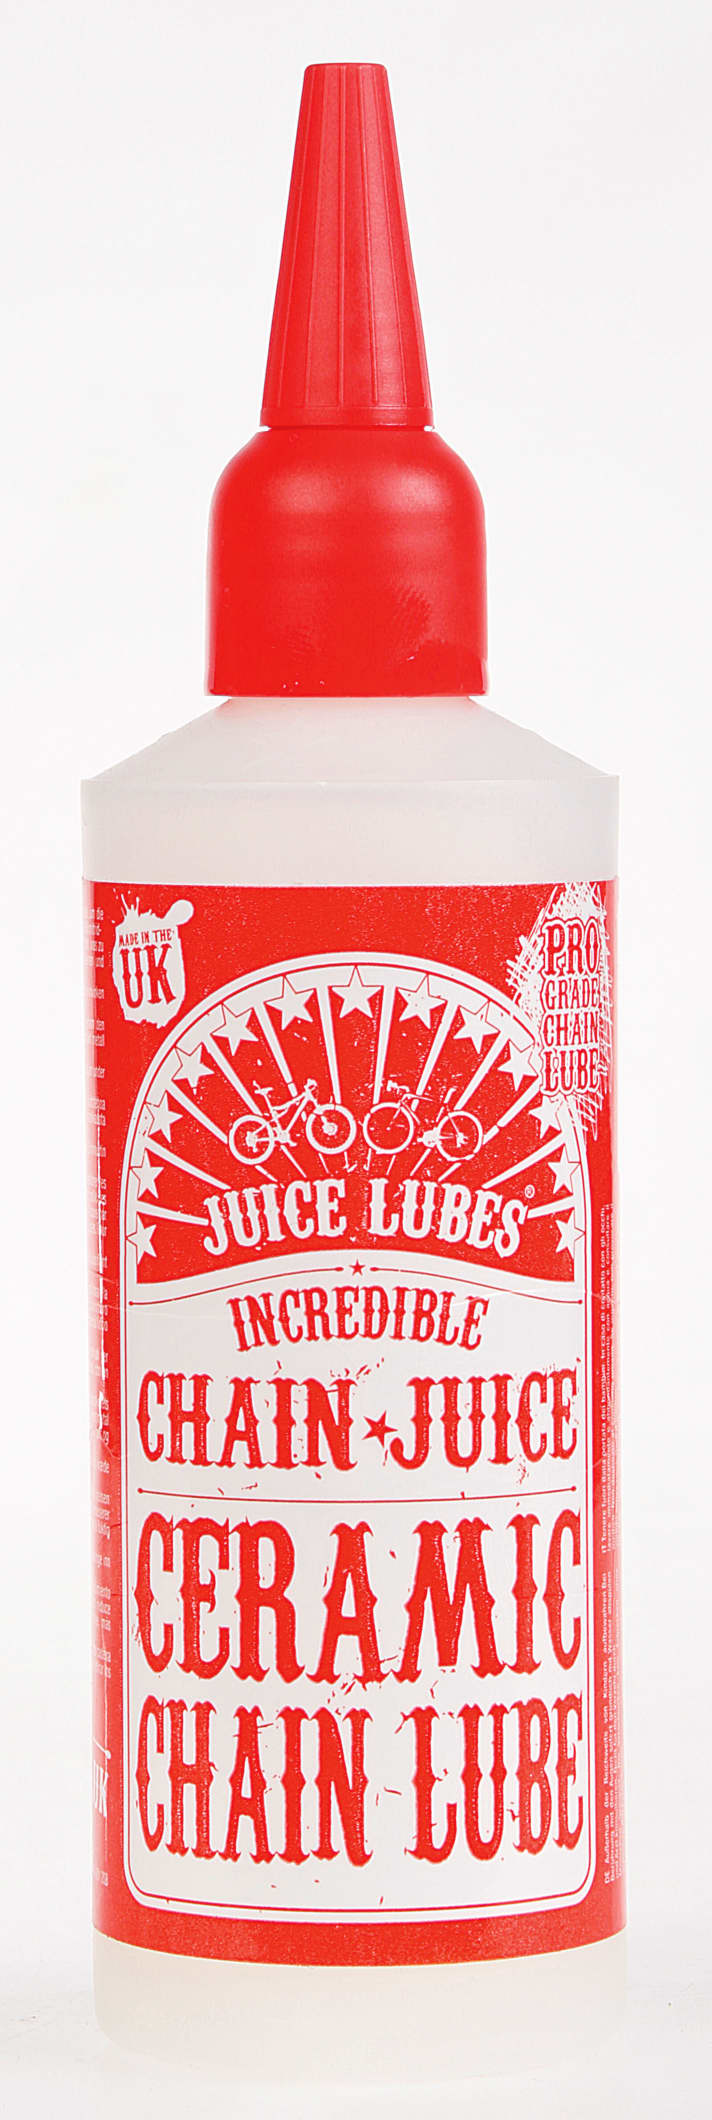   Juice Lubes Chain Juice Ceramic